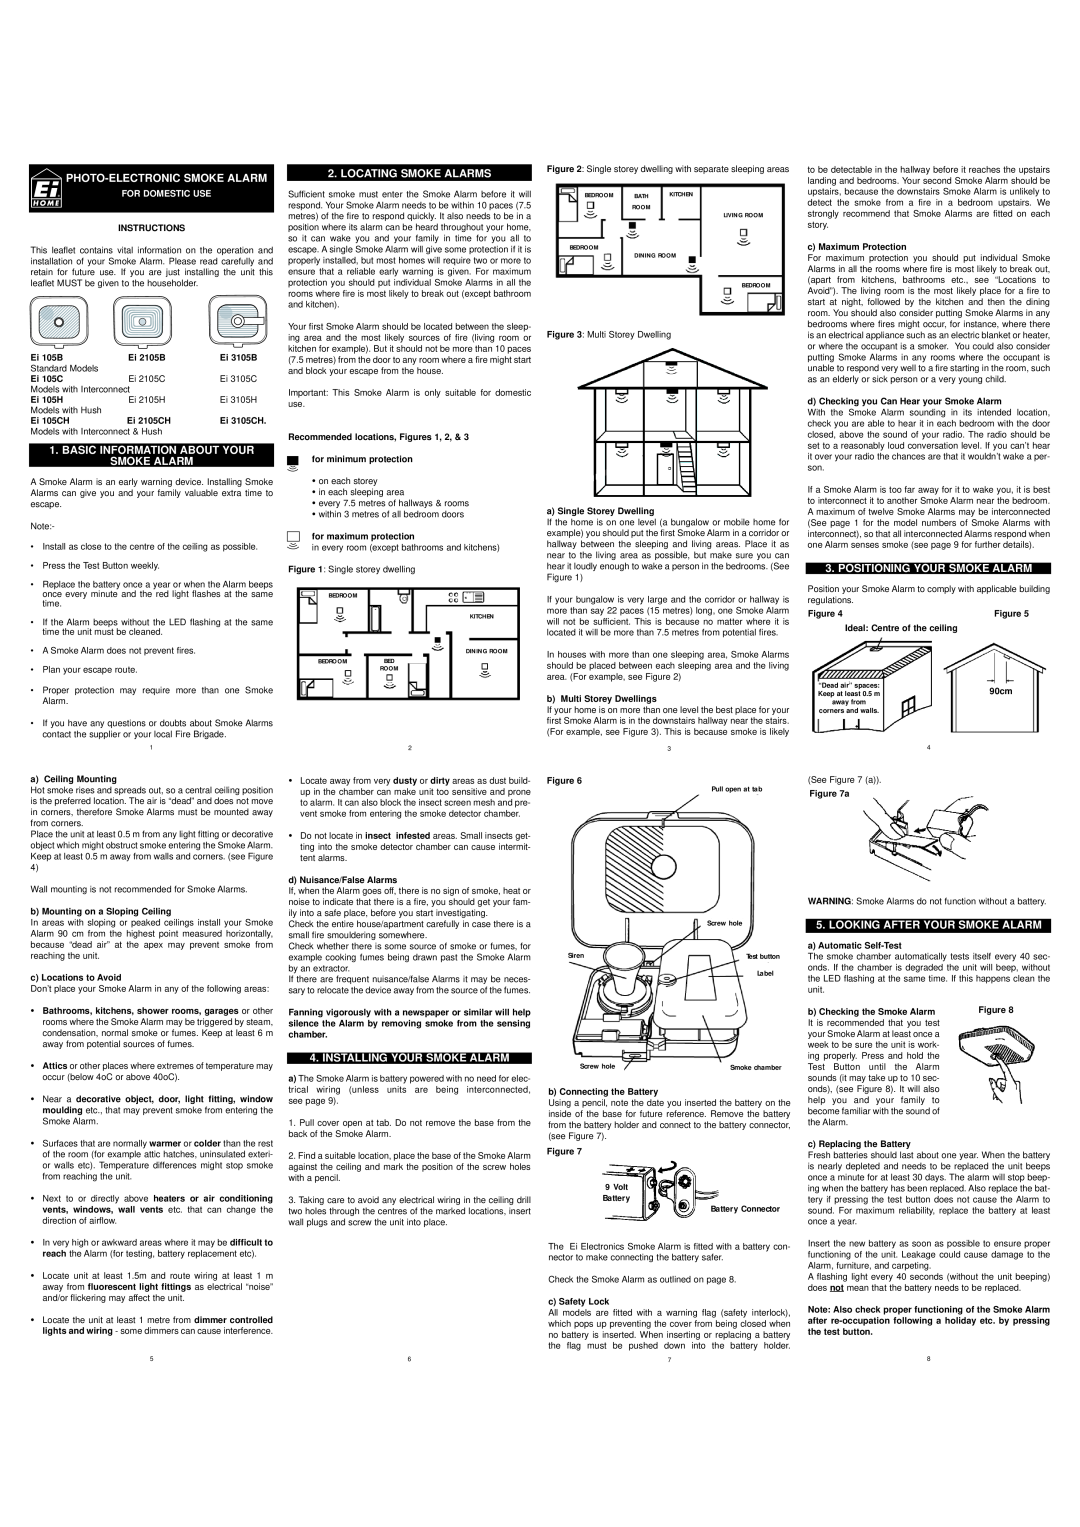 Ei Electronics Ei3105H manual Photo-Electronic Smoke Alarm, Basic Information About Your Smoke Alarm, For Domestic Use 